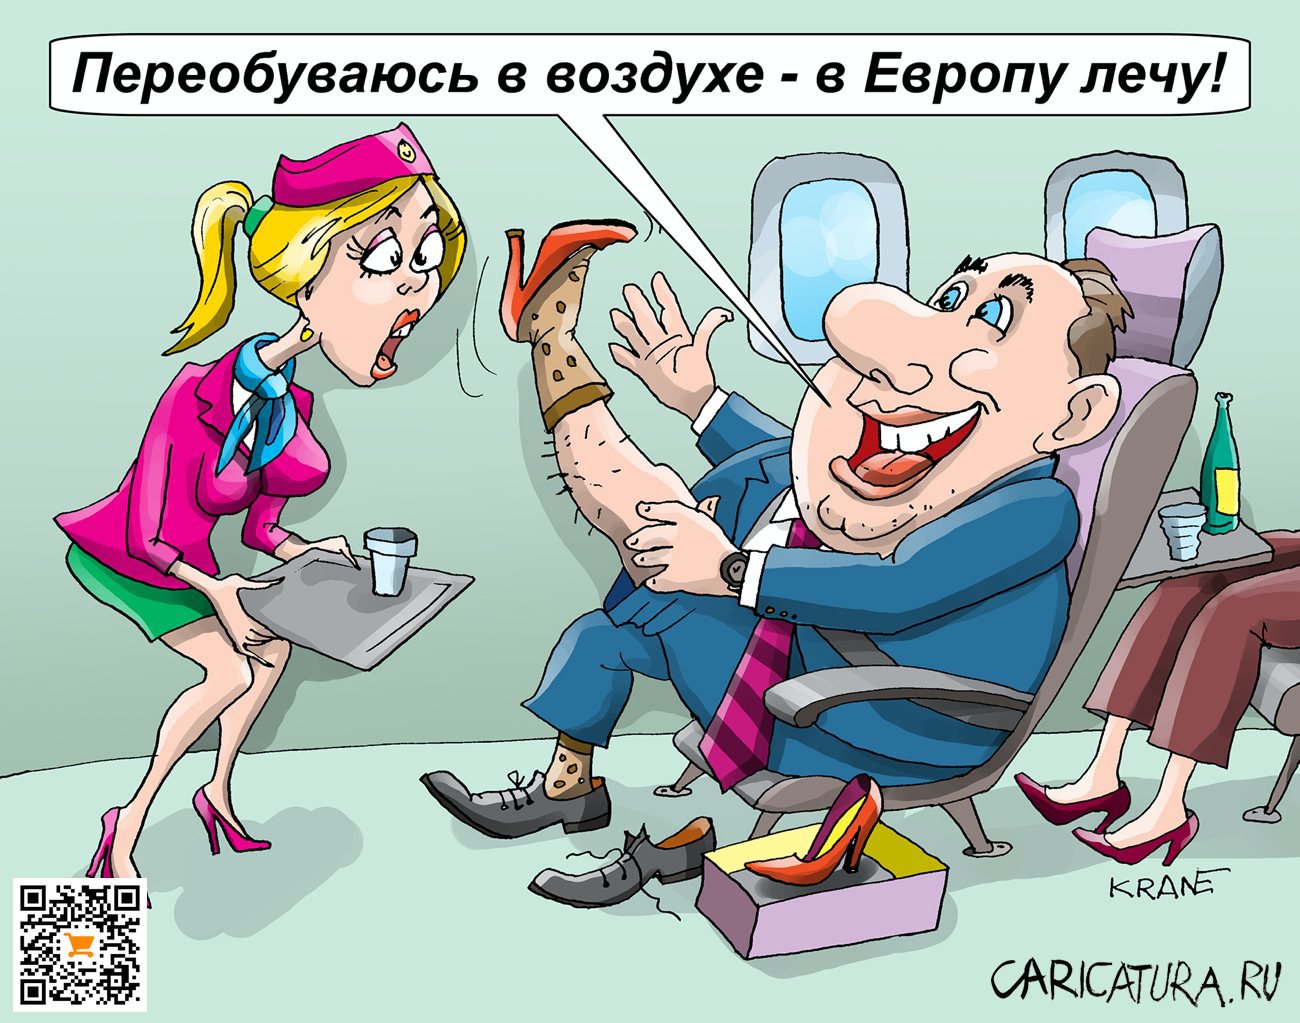 Карикатура "Окно в Европу сквозит", Евгений Кран